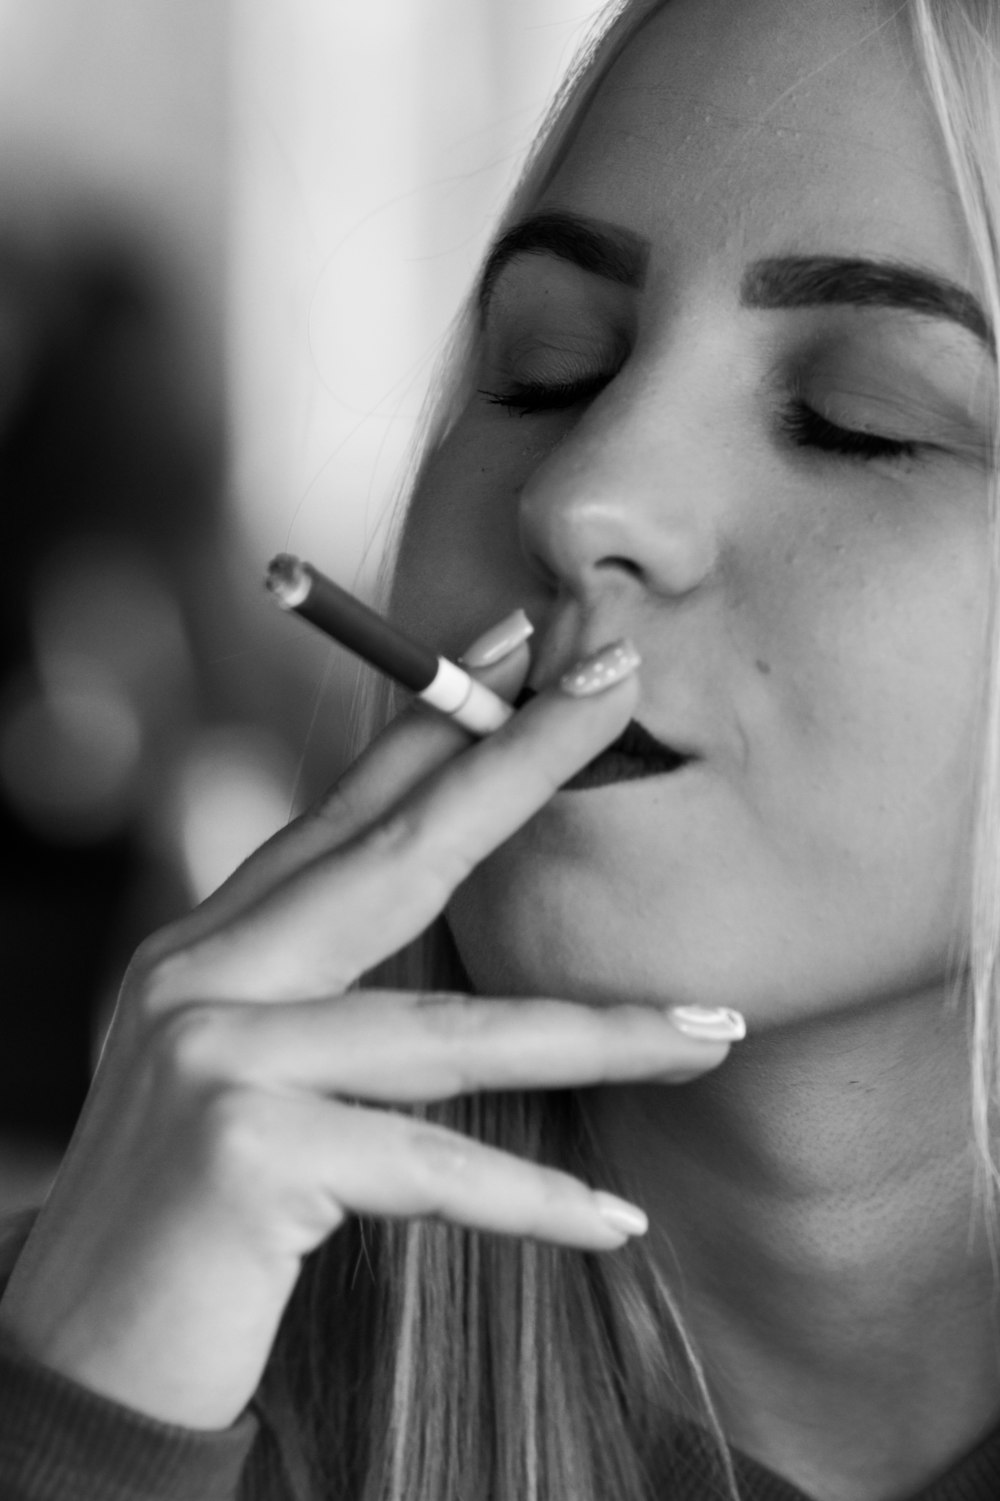 una mujer fumando un cigarrillo